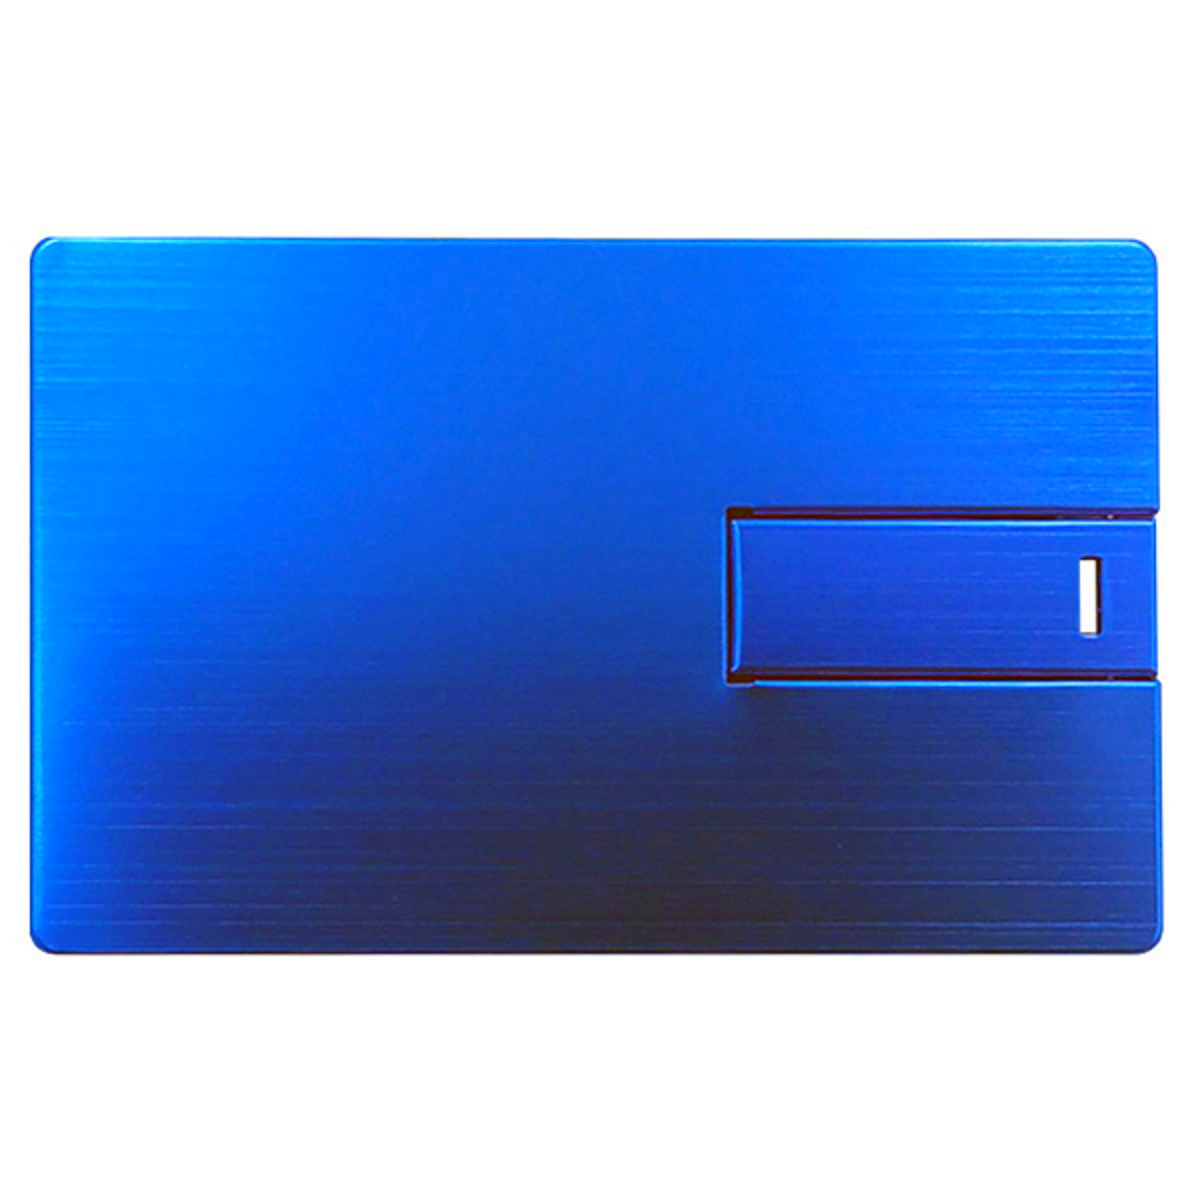 128 GERMANY GB) USB USB-Stick ® Metall-Kreditkarte (Blau,